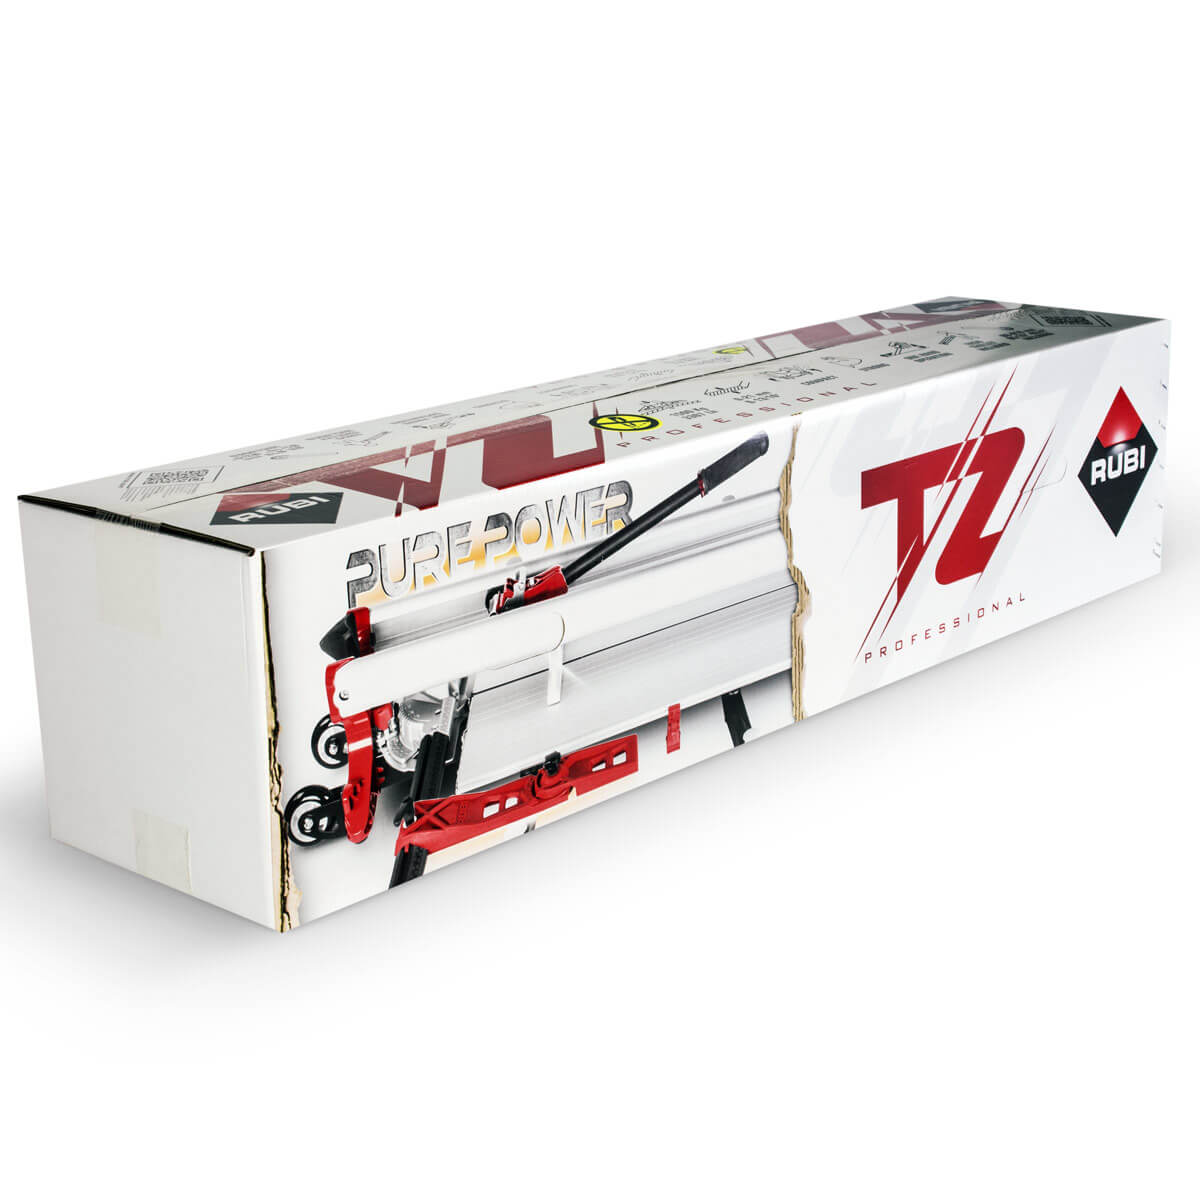 Rubi TZ Series Professional Tile Cutters